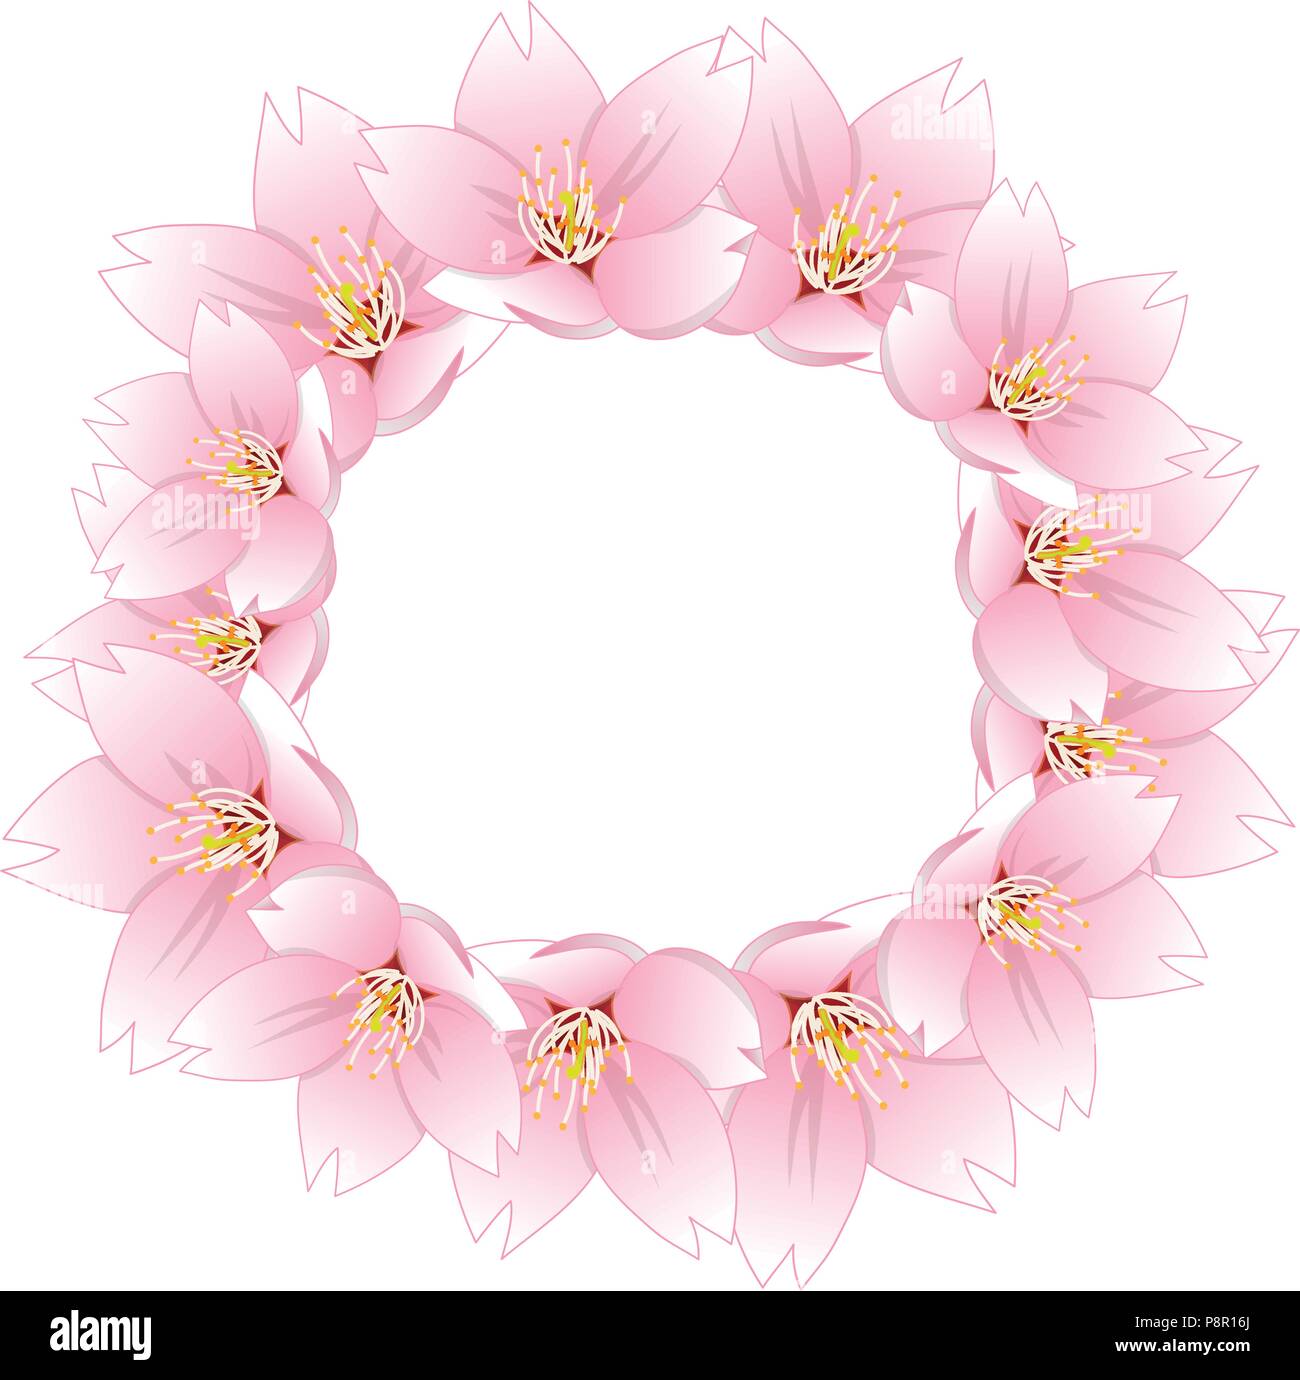 Prunus serrulata  - Cherry blossom, Sakura Wreath isolated on White Background. Vector Illustration. Stock Vector